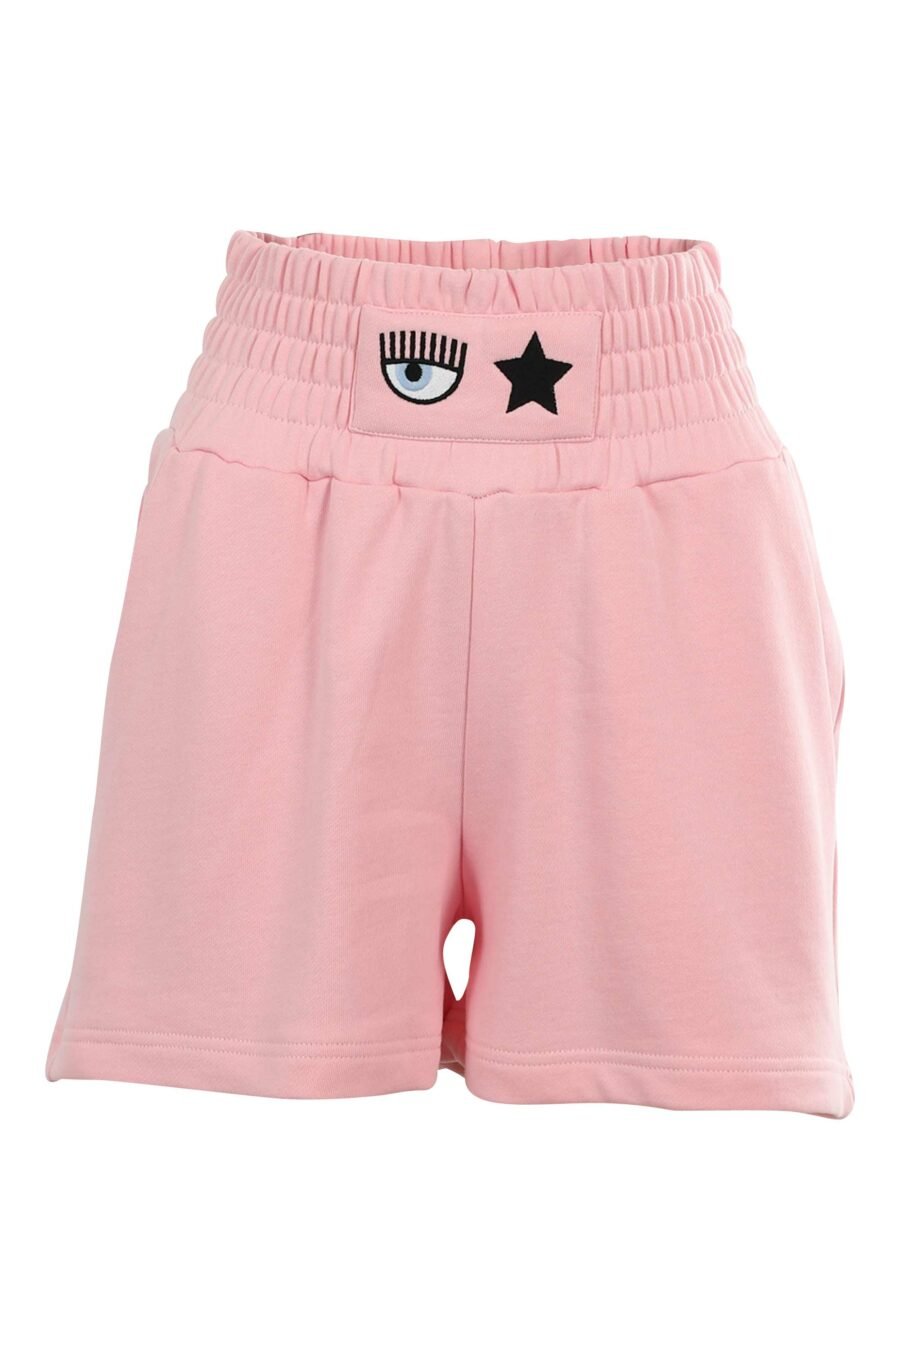 Trainingshose rosa Shorts mit Auge und Stern-Logo - 8052672415530